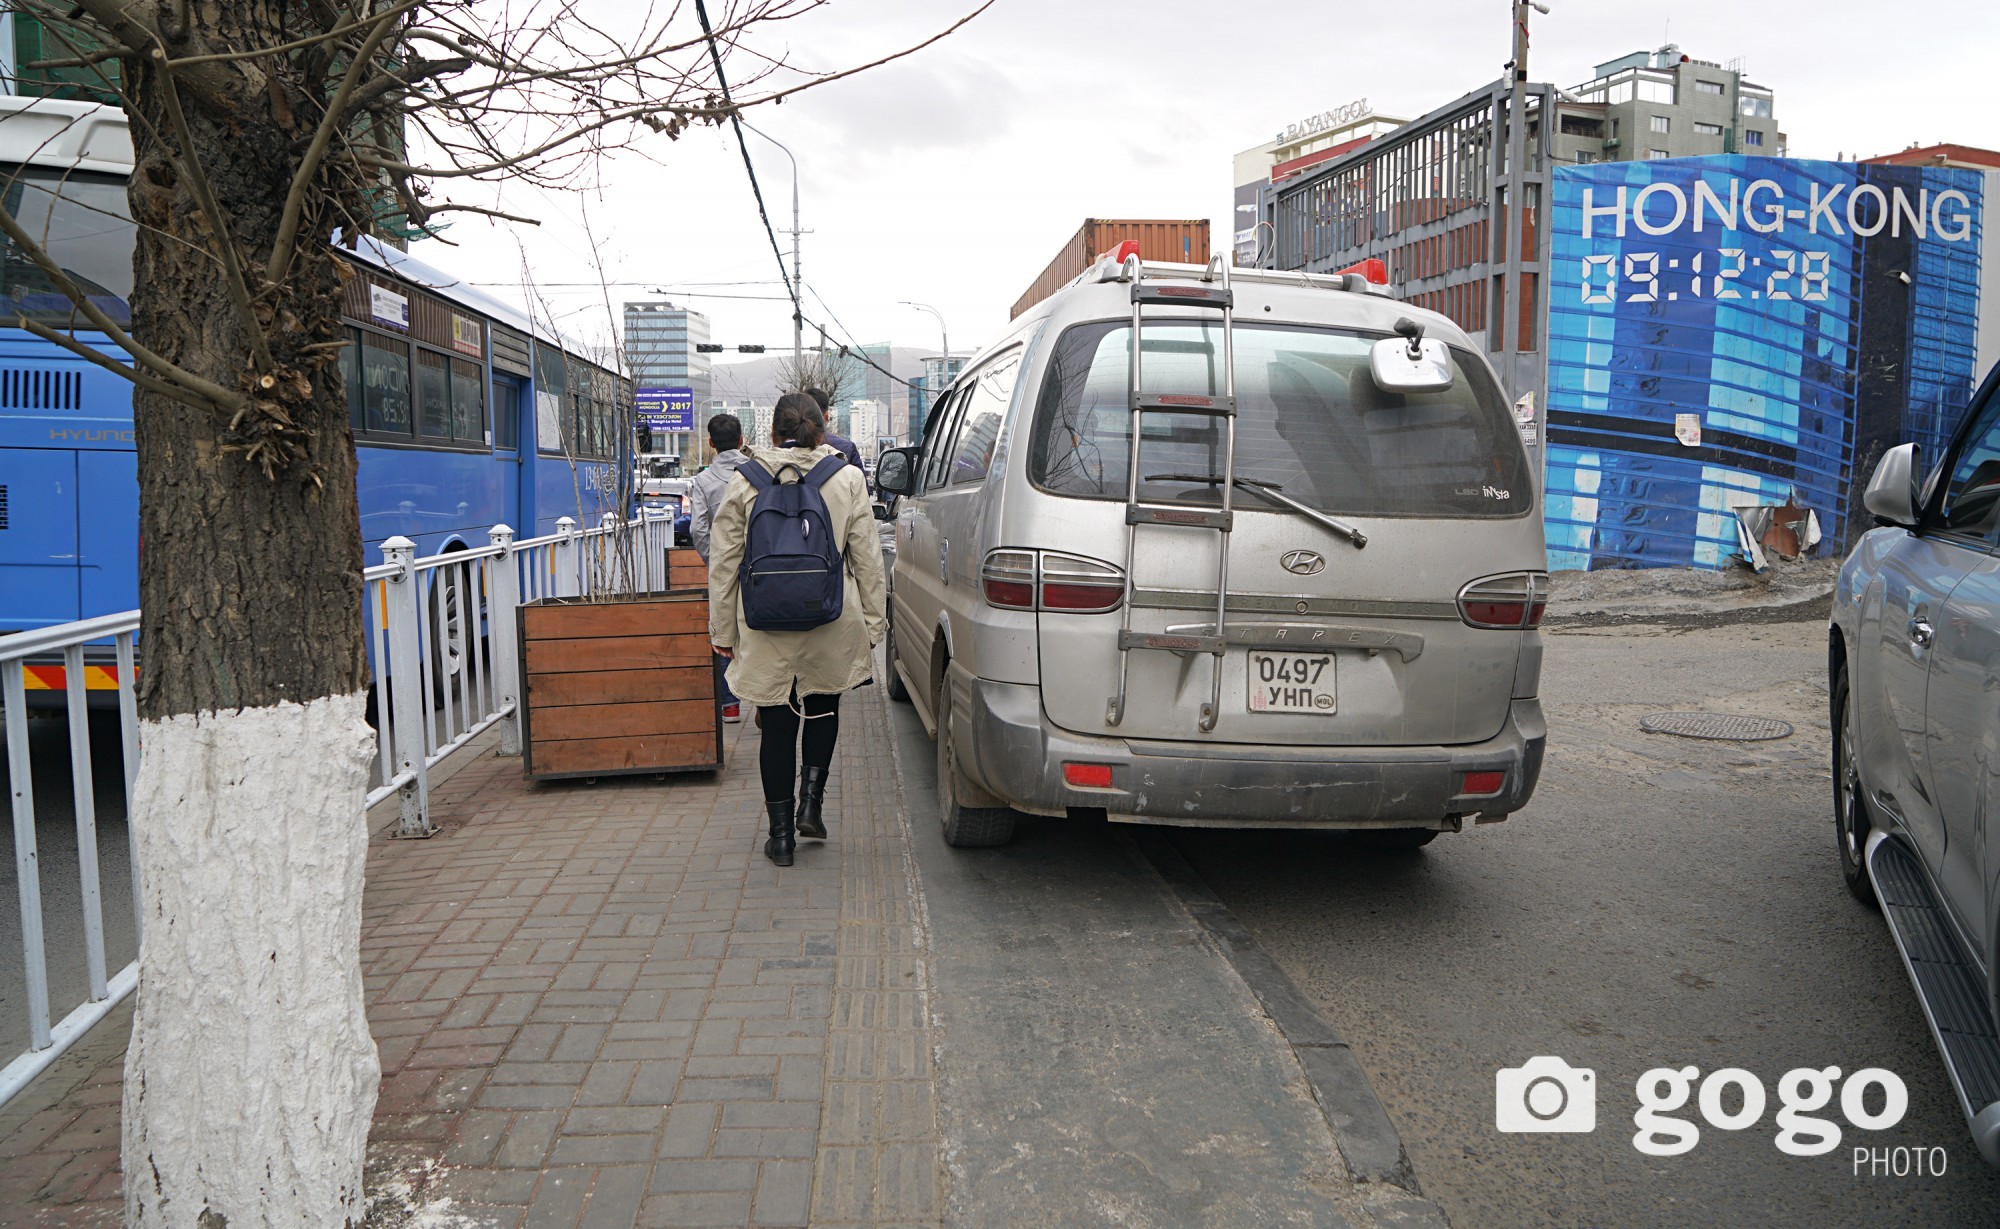 Pedestrian in front of KFC. Too cramped Ulaanbaatar... /2017.04.22/